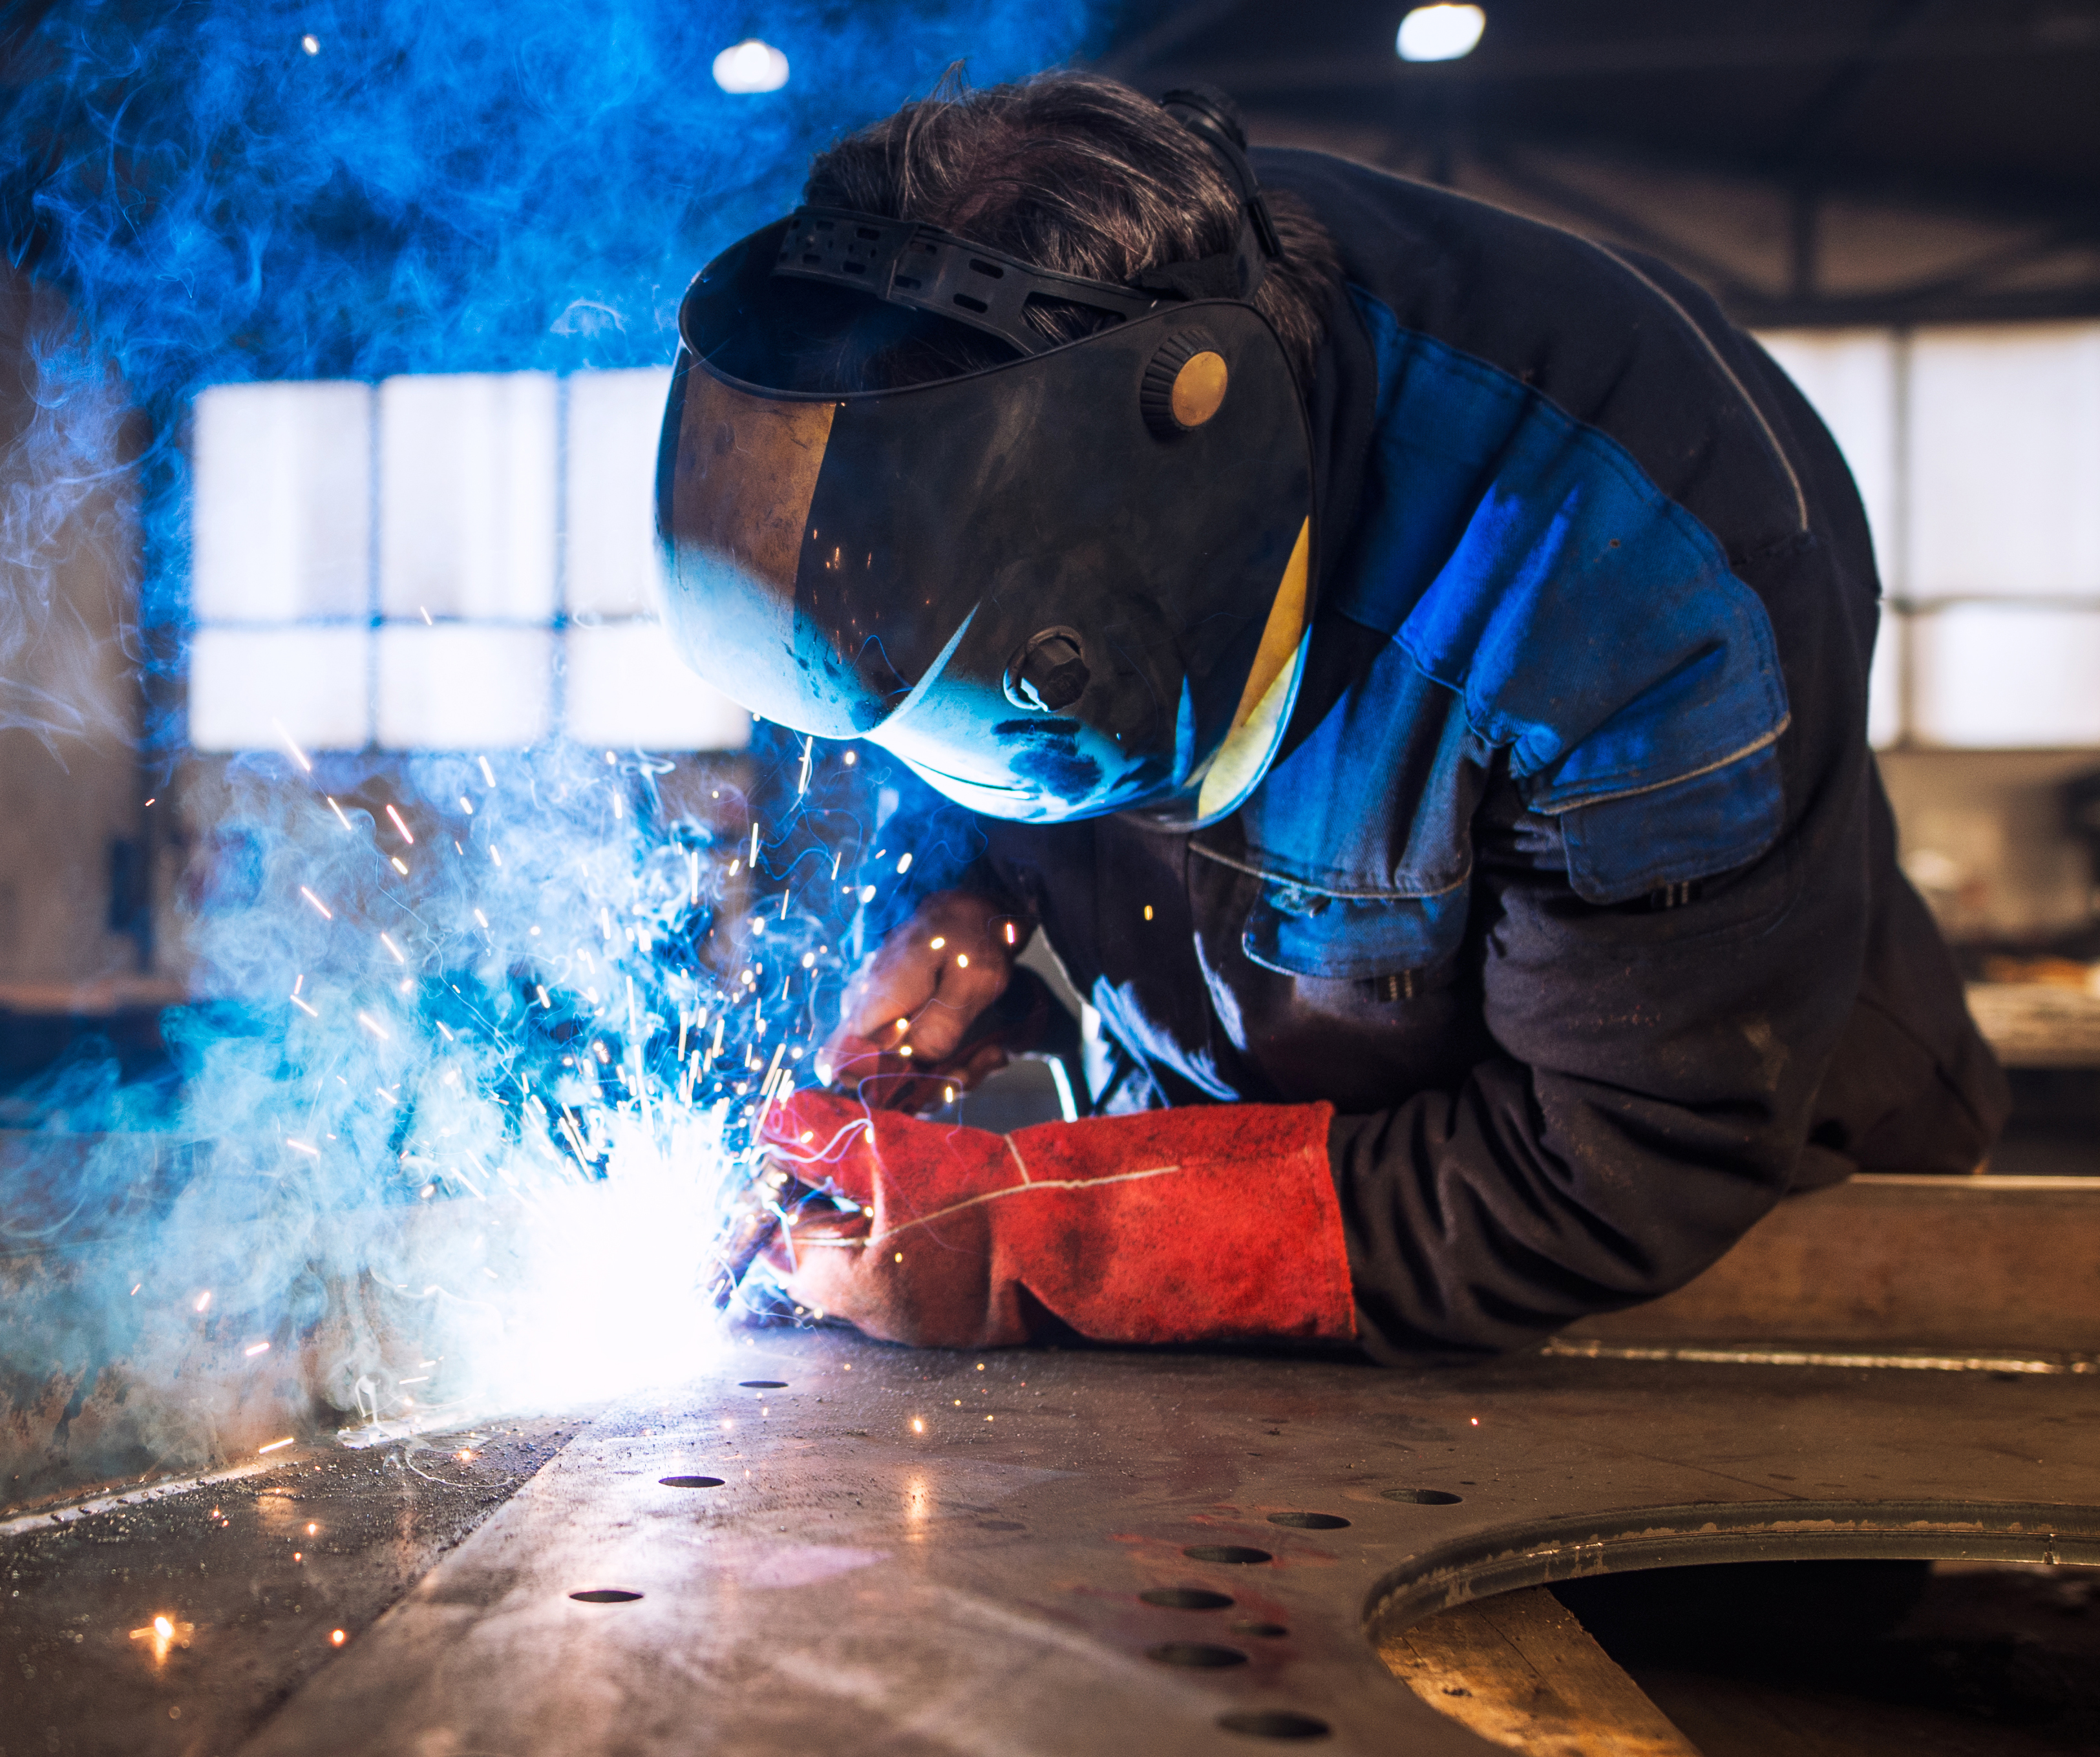 Register today for these popular hands-on welding workshops!